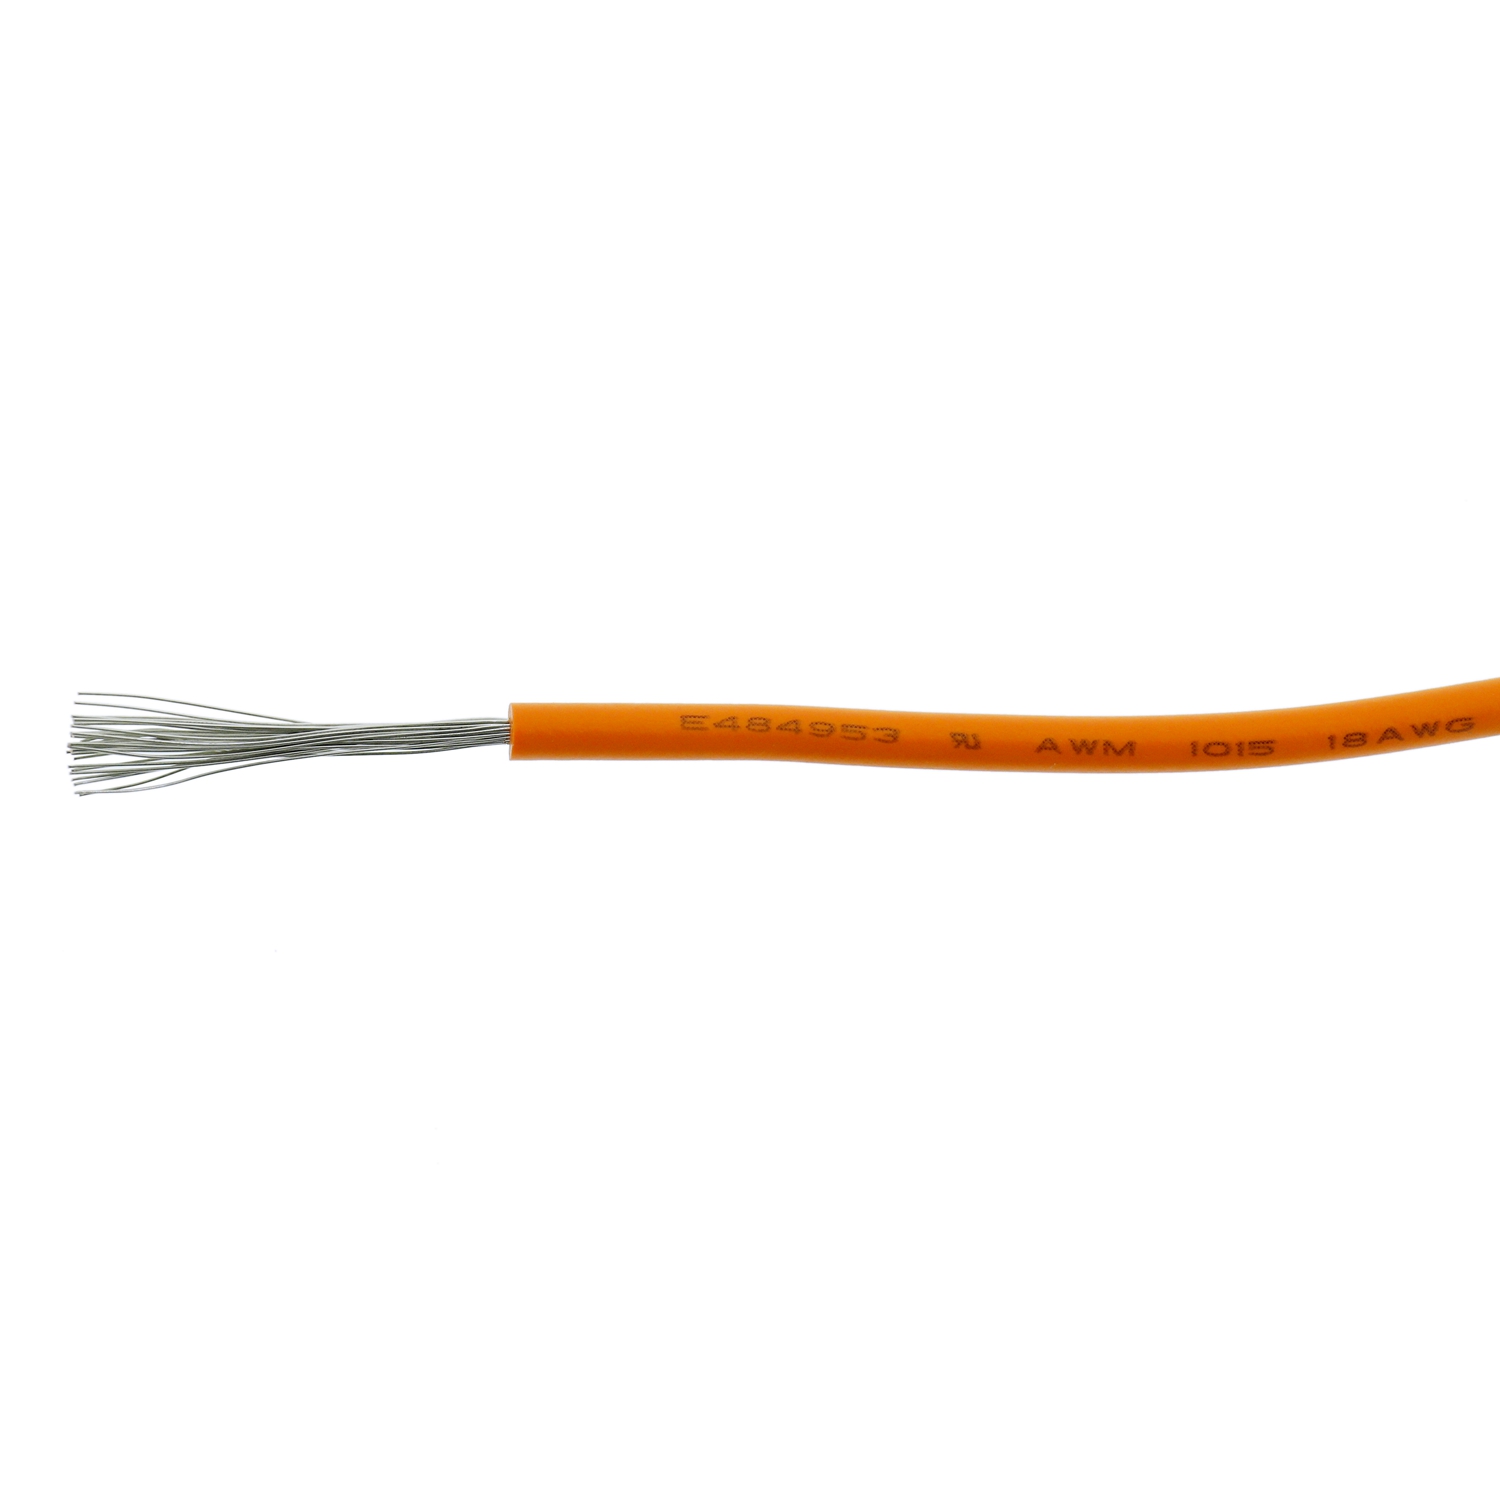 https://iqrorwxhlkmilm5p.leadongcdn.com/cloud/loBpkKmnlrSRmiljiokmiq/UL1015-18AWG-Hookup-Wire-Flame-Retardant-UL-AWM-Wire.jpg